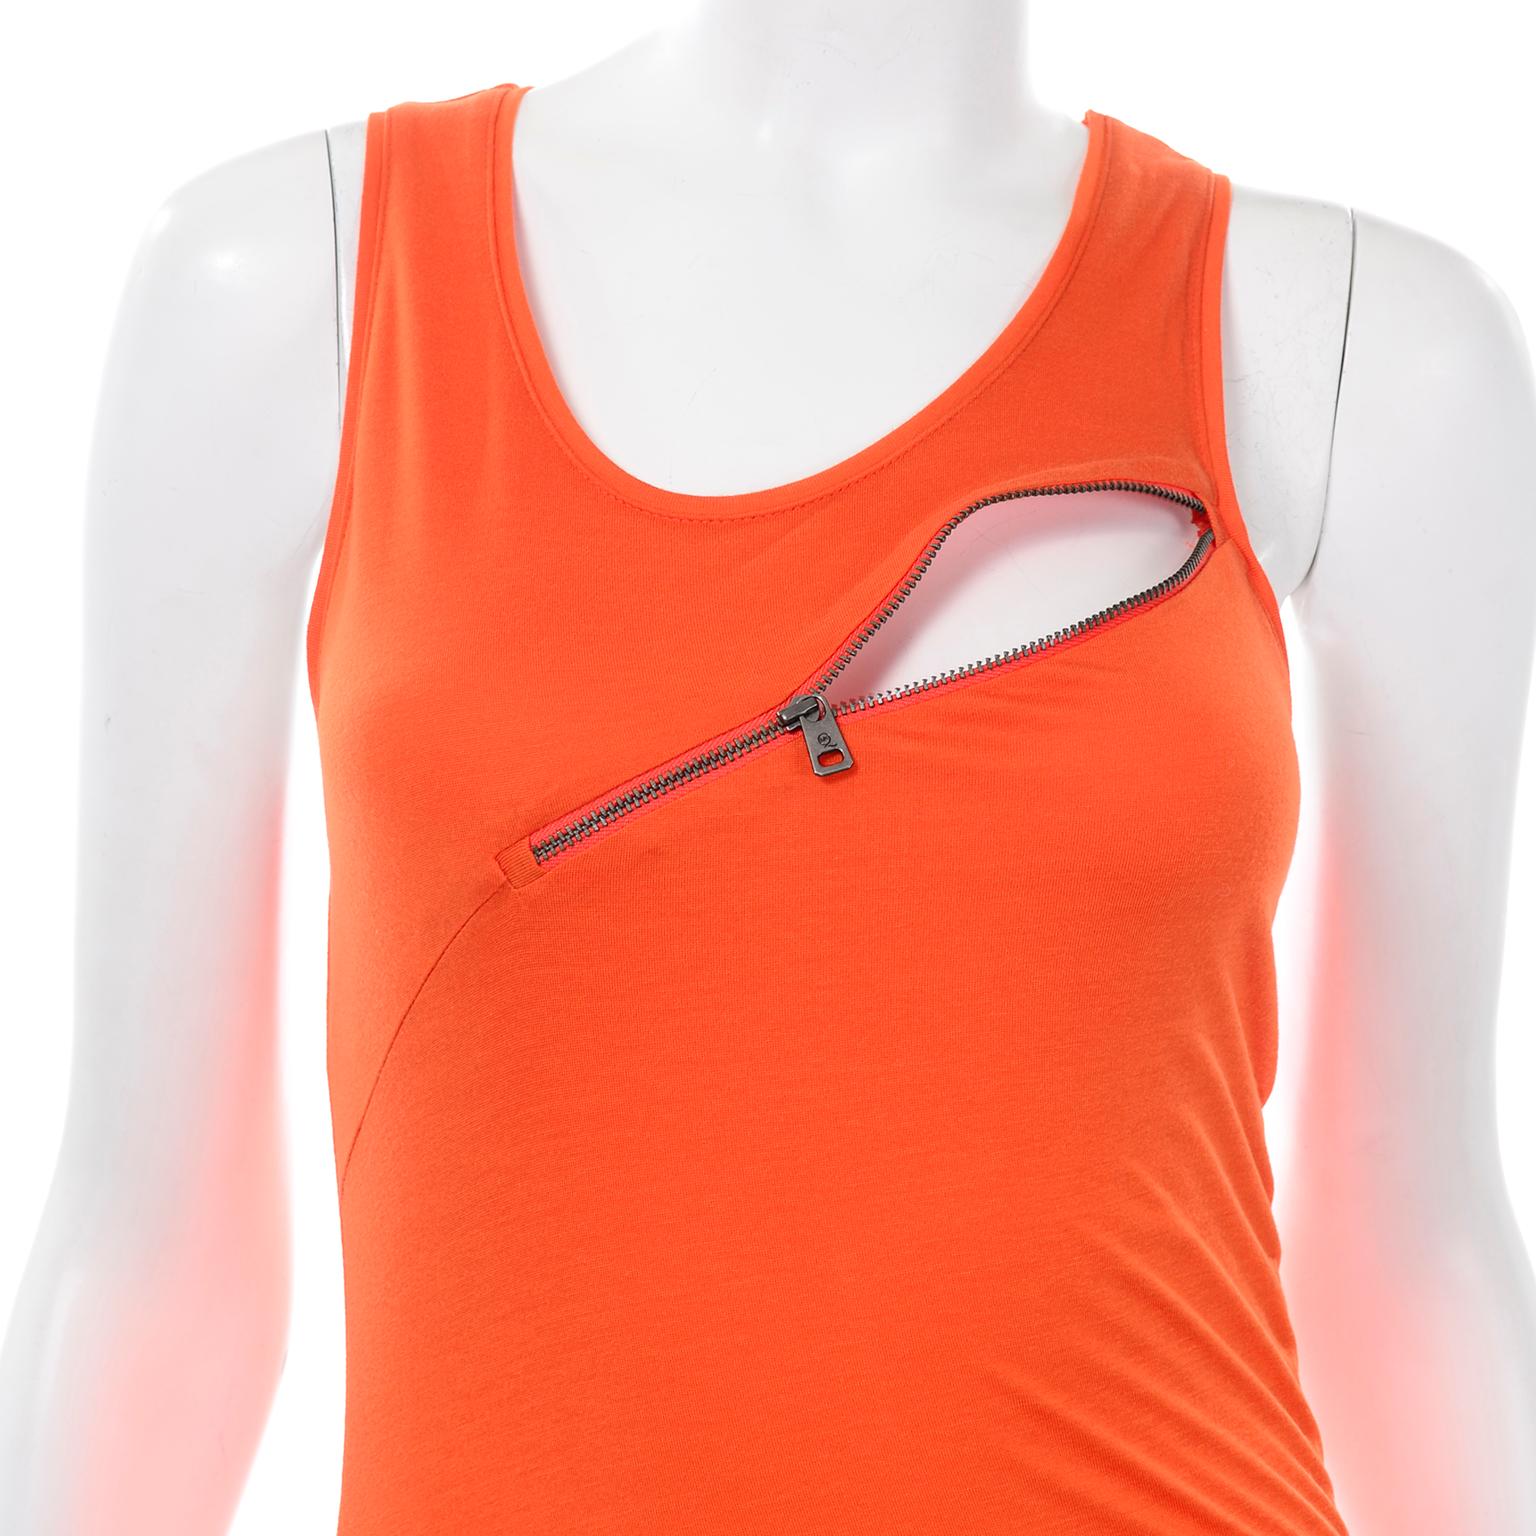 Red McQ Alexander McQueen Orange Stretch Knit Dress W Cut Out Zipper Details For Sale